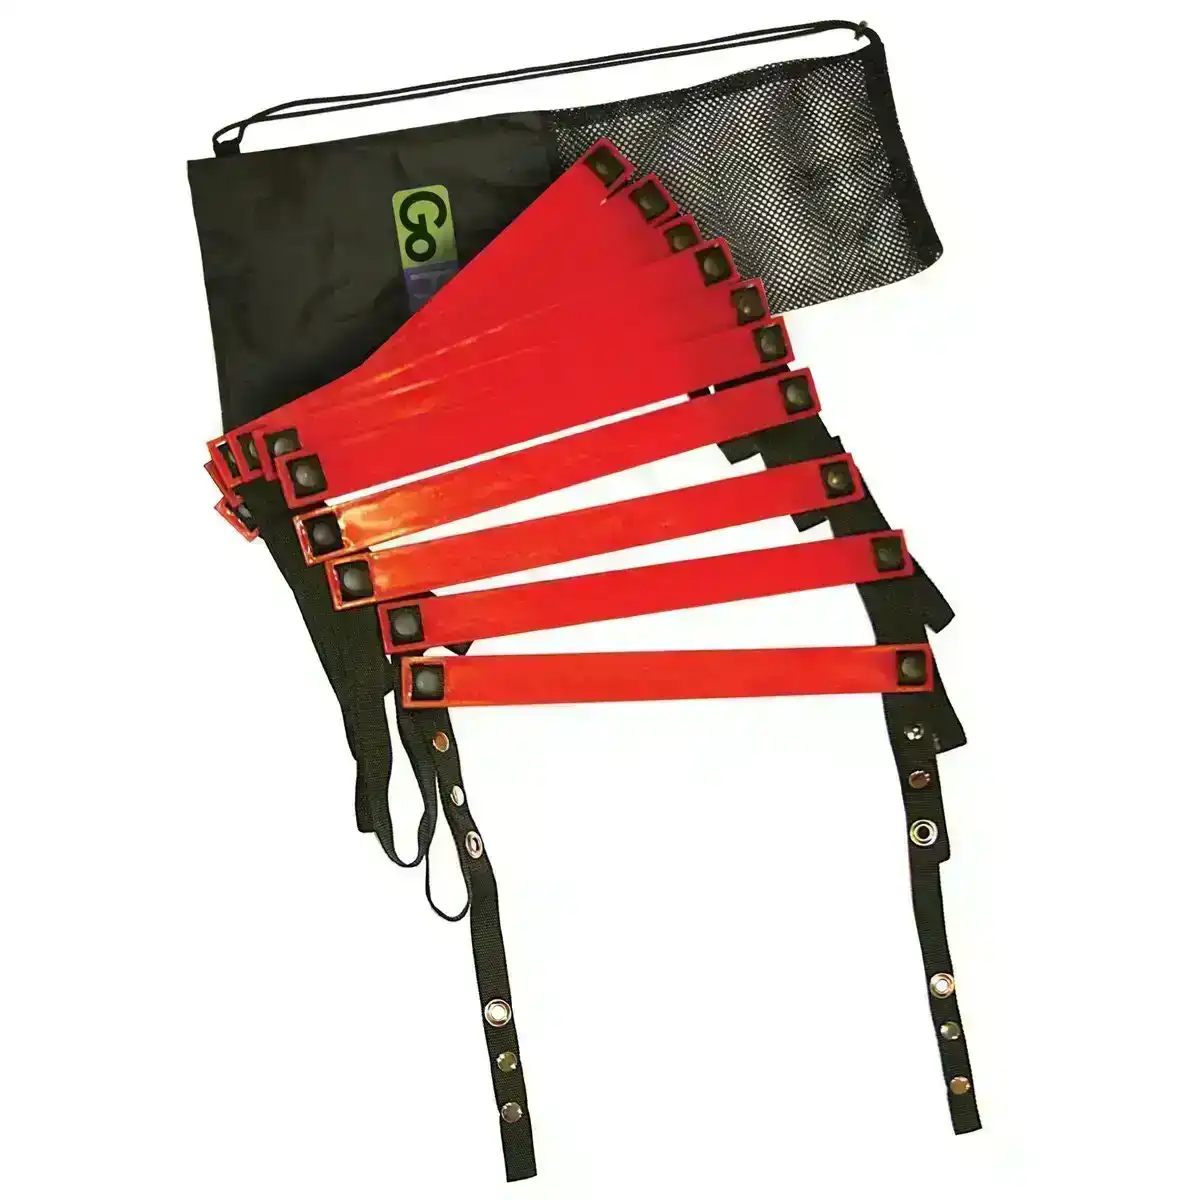 Gofit 45cm Agility Ladder w/ Bag Sports/Football/Soccer Training Equipment Red